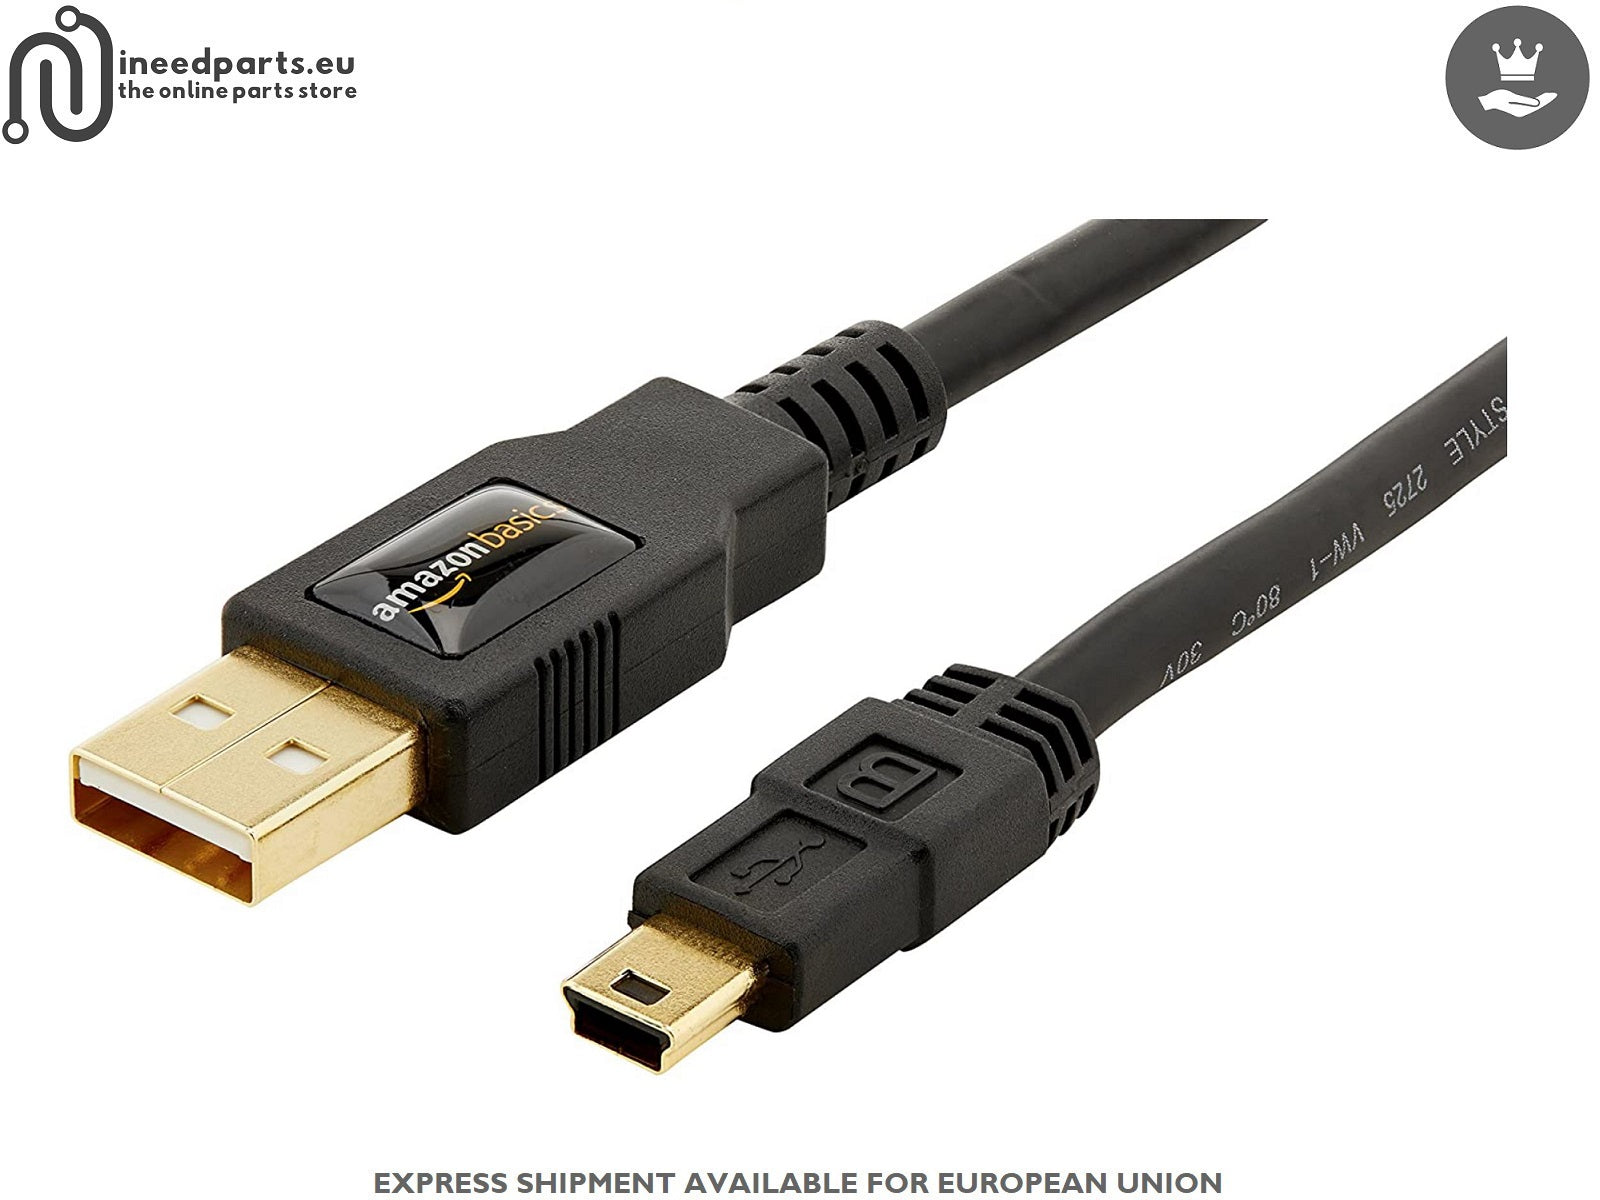 kærtegn Gå en tur brud USB 2.0 Cable, type A-Male to Mini-B Cable, 0.9 meters - iNeedParts